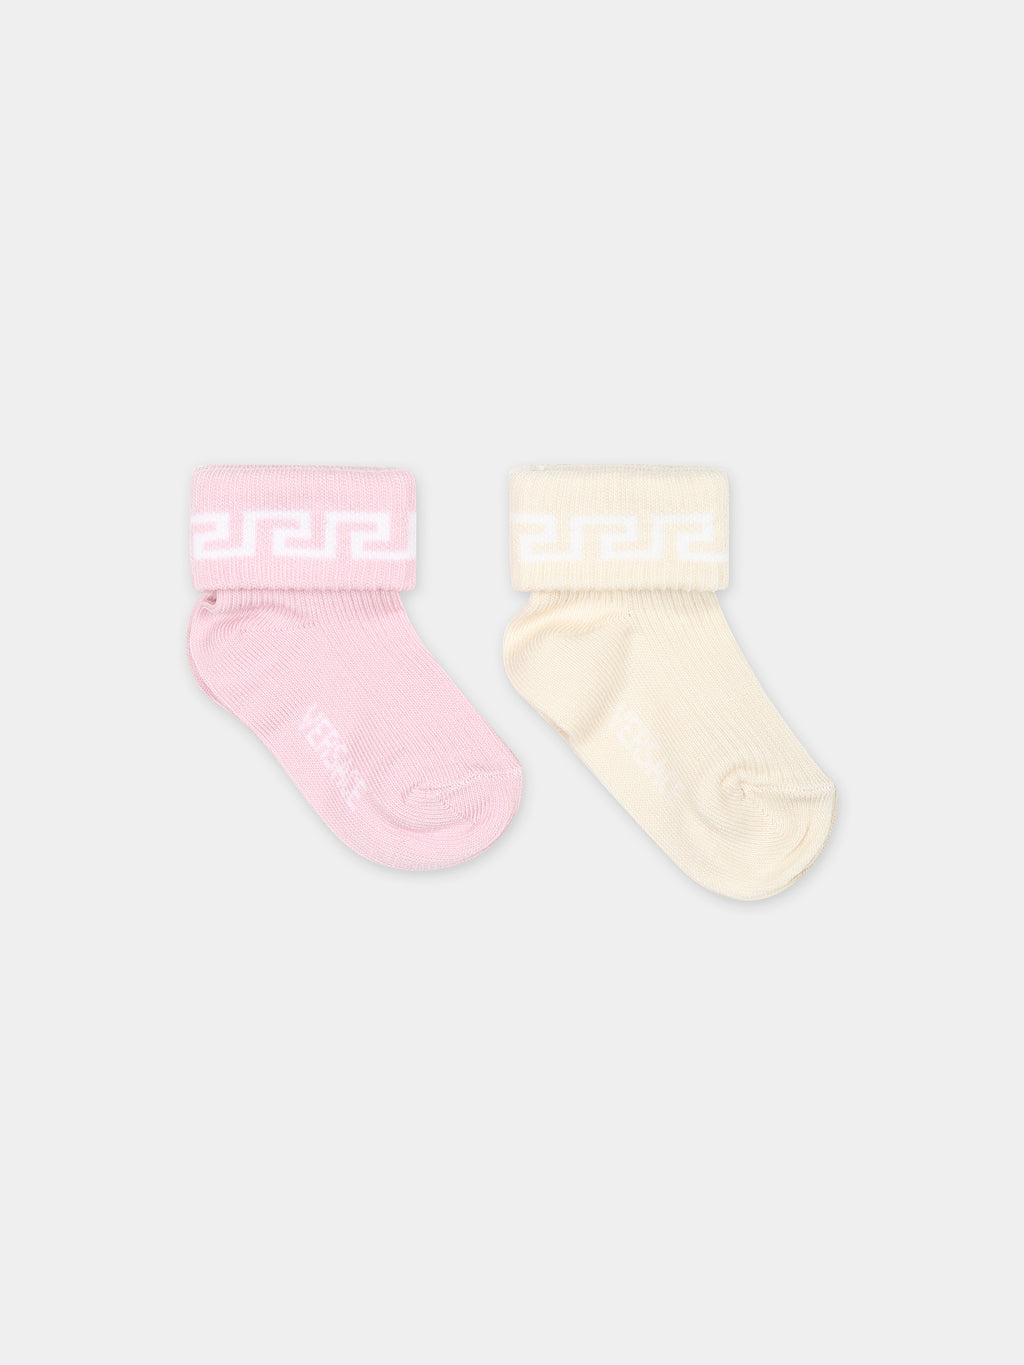 Multicolor socks set for baby girl with Greca